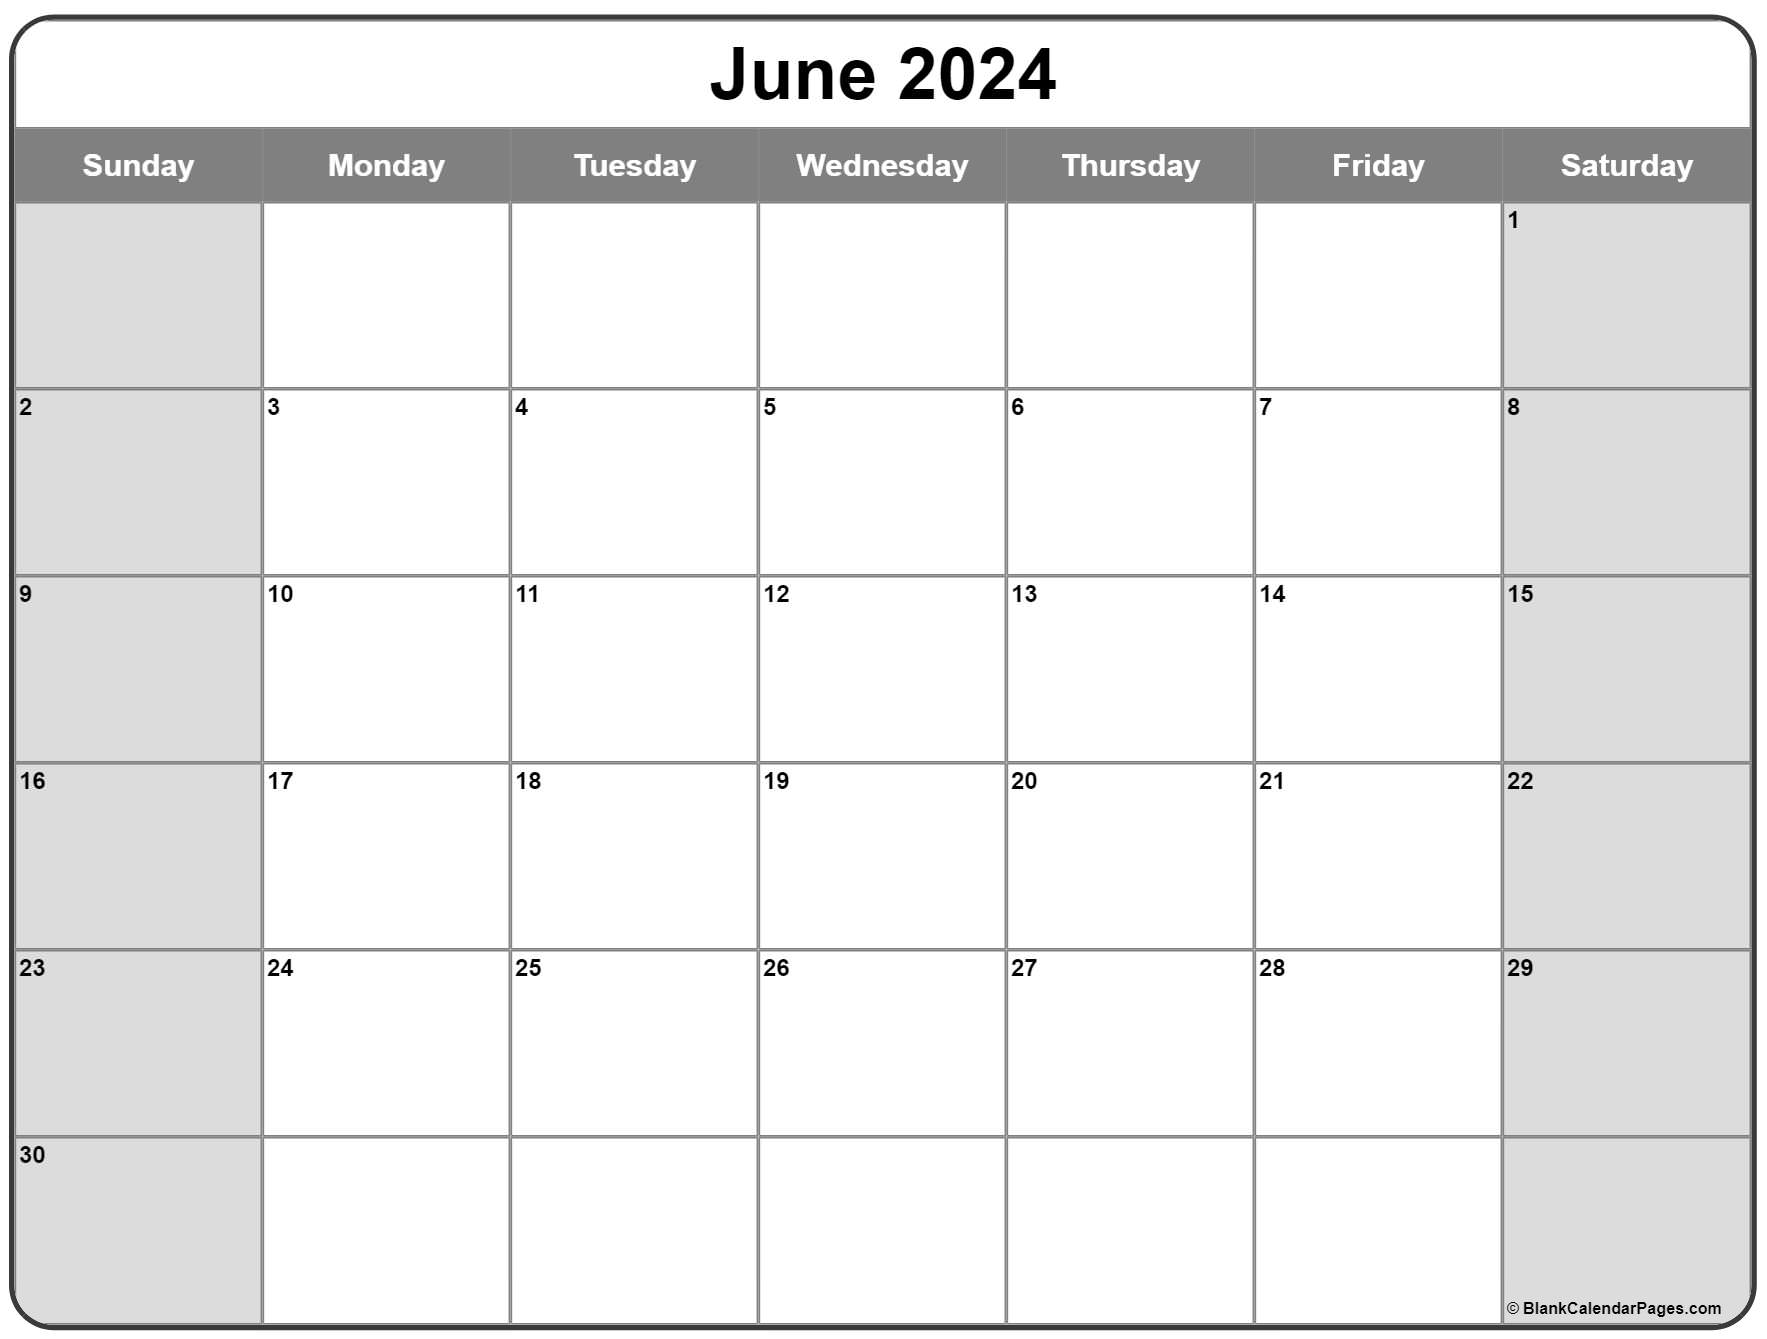 June 2024 calendar | free printable calendar